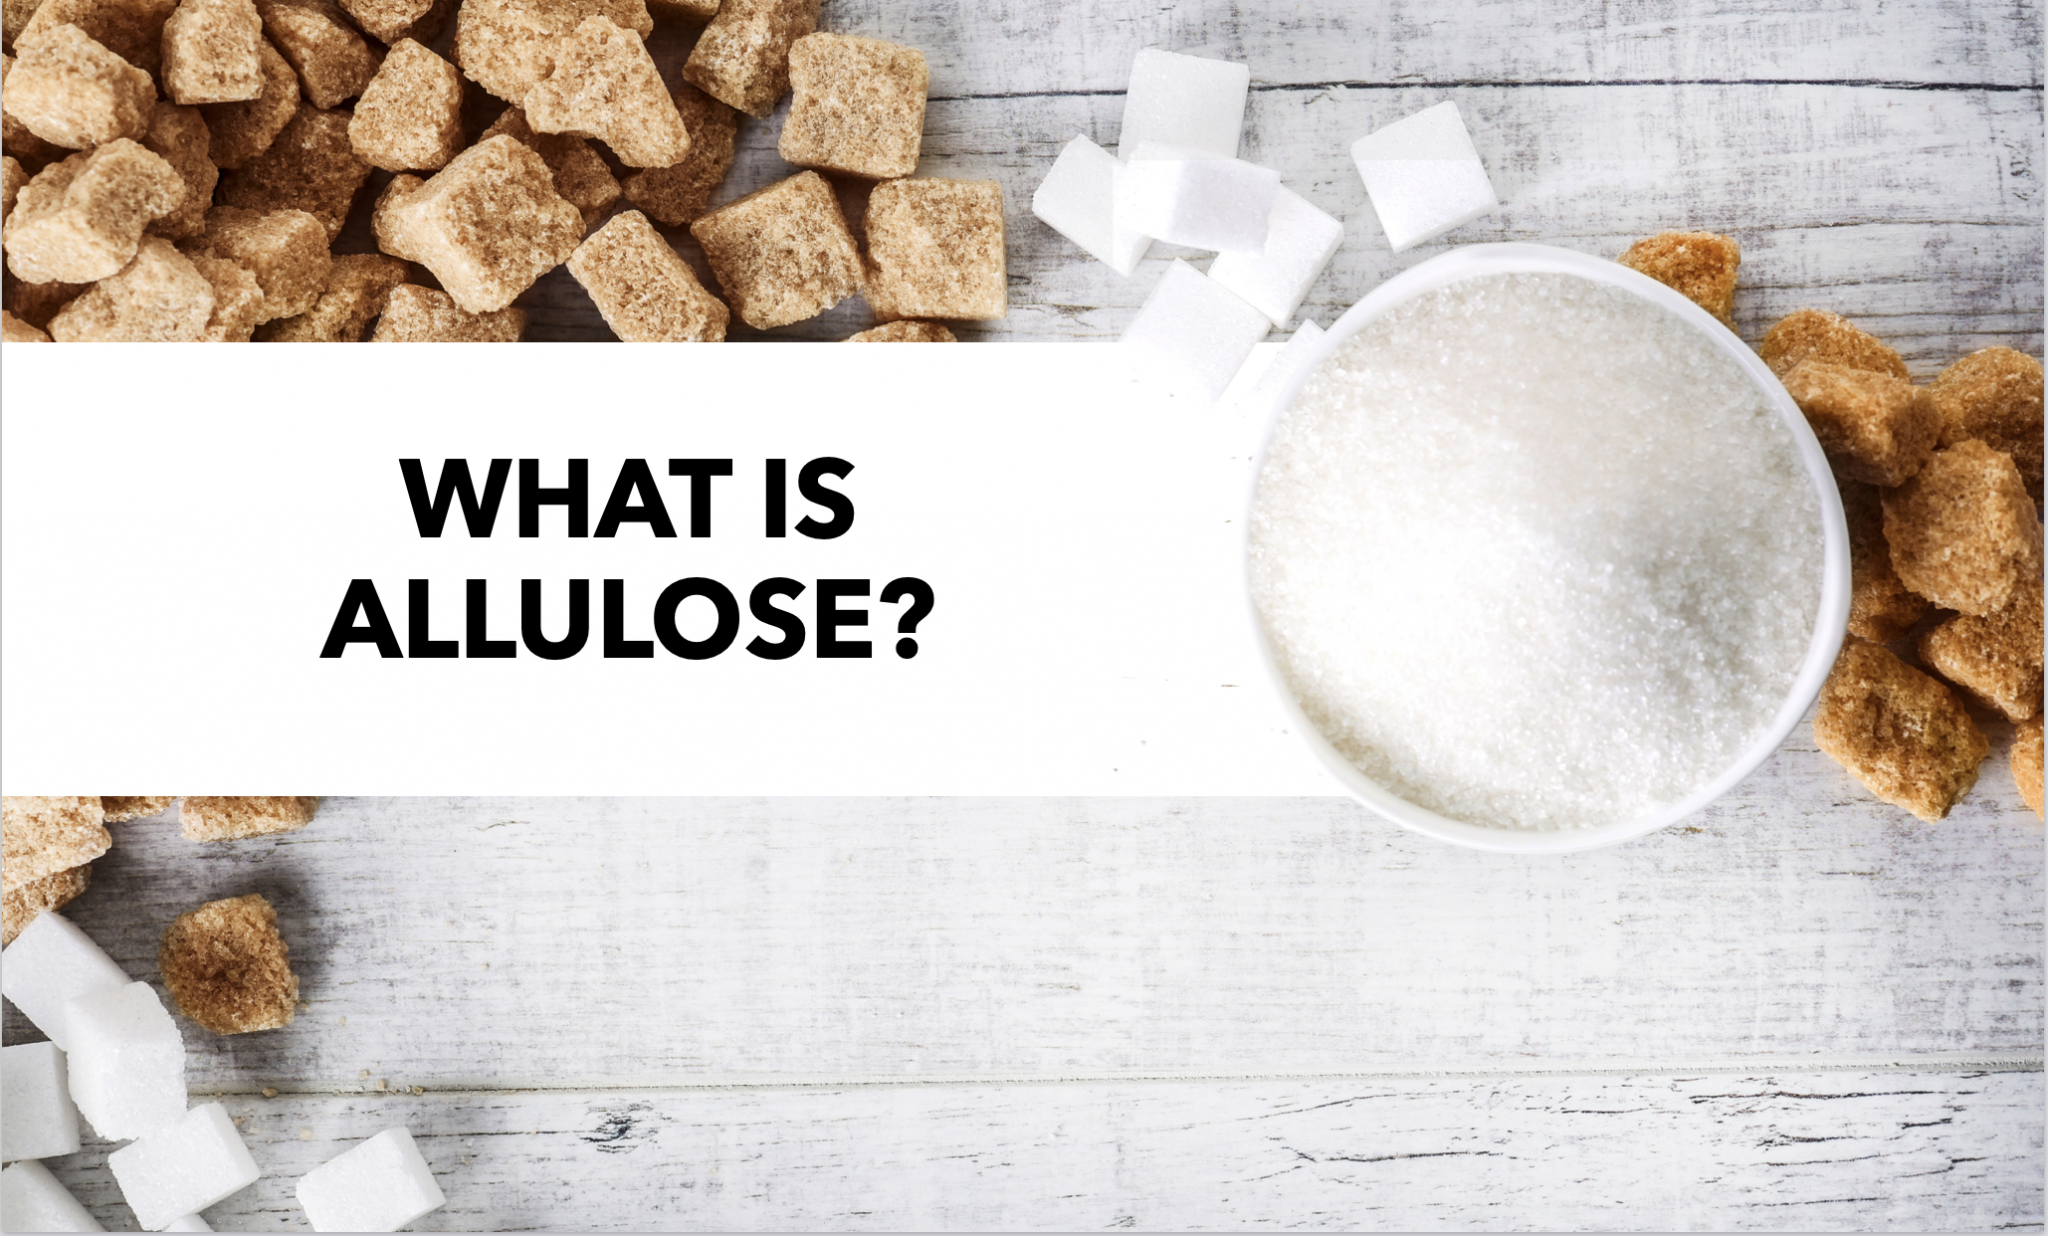 Alulose ምንድን ነው እና የ Allulose ጥቅሞች ምንድ ናቸው?